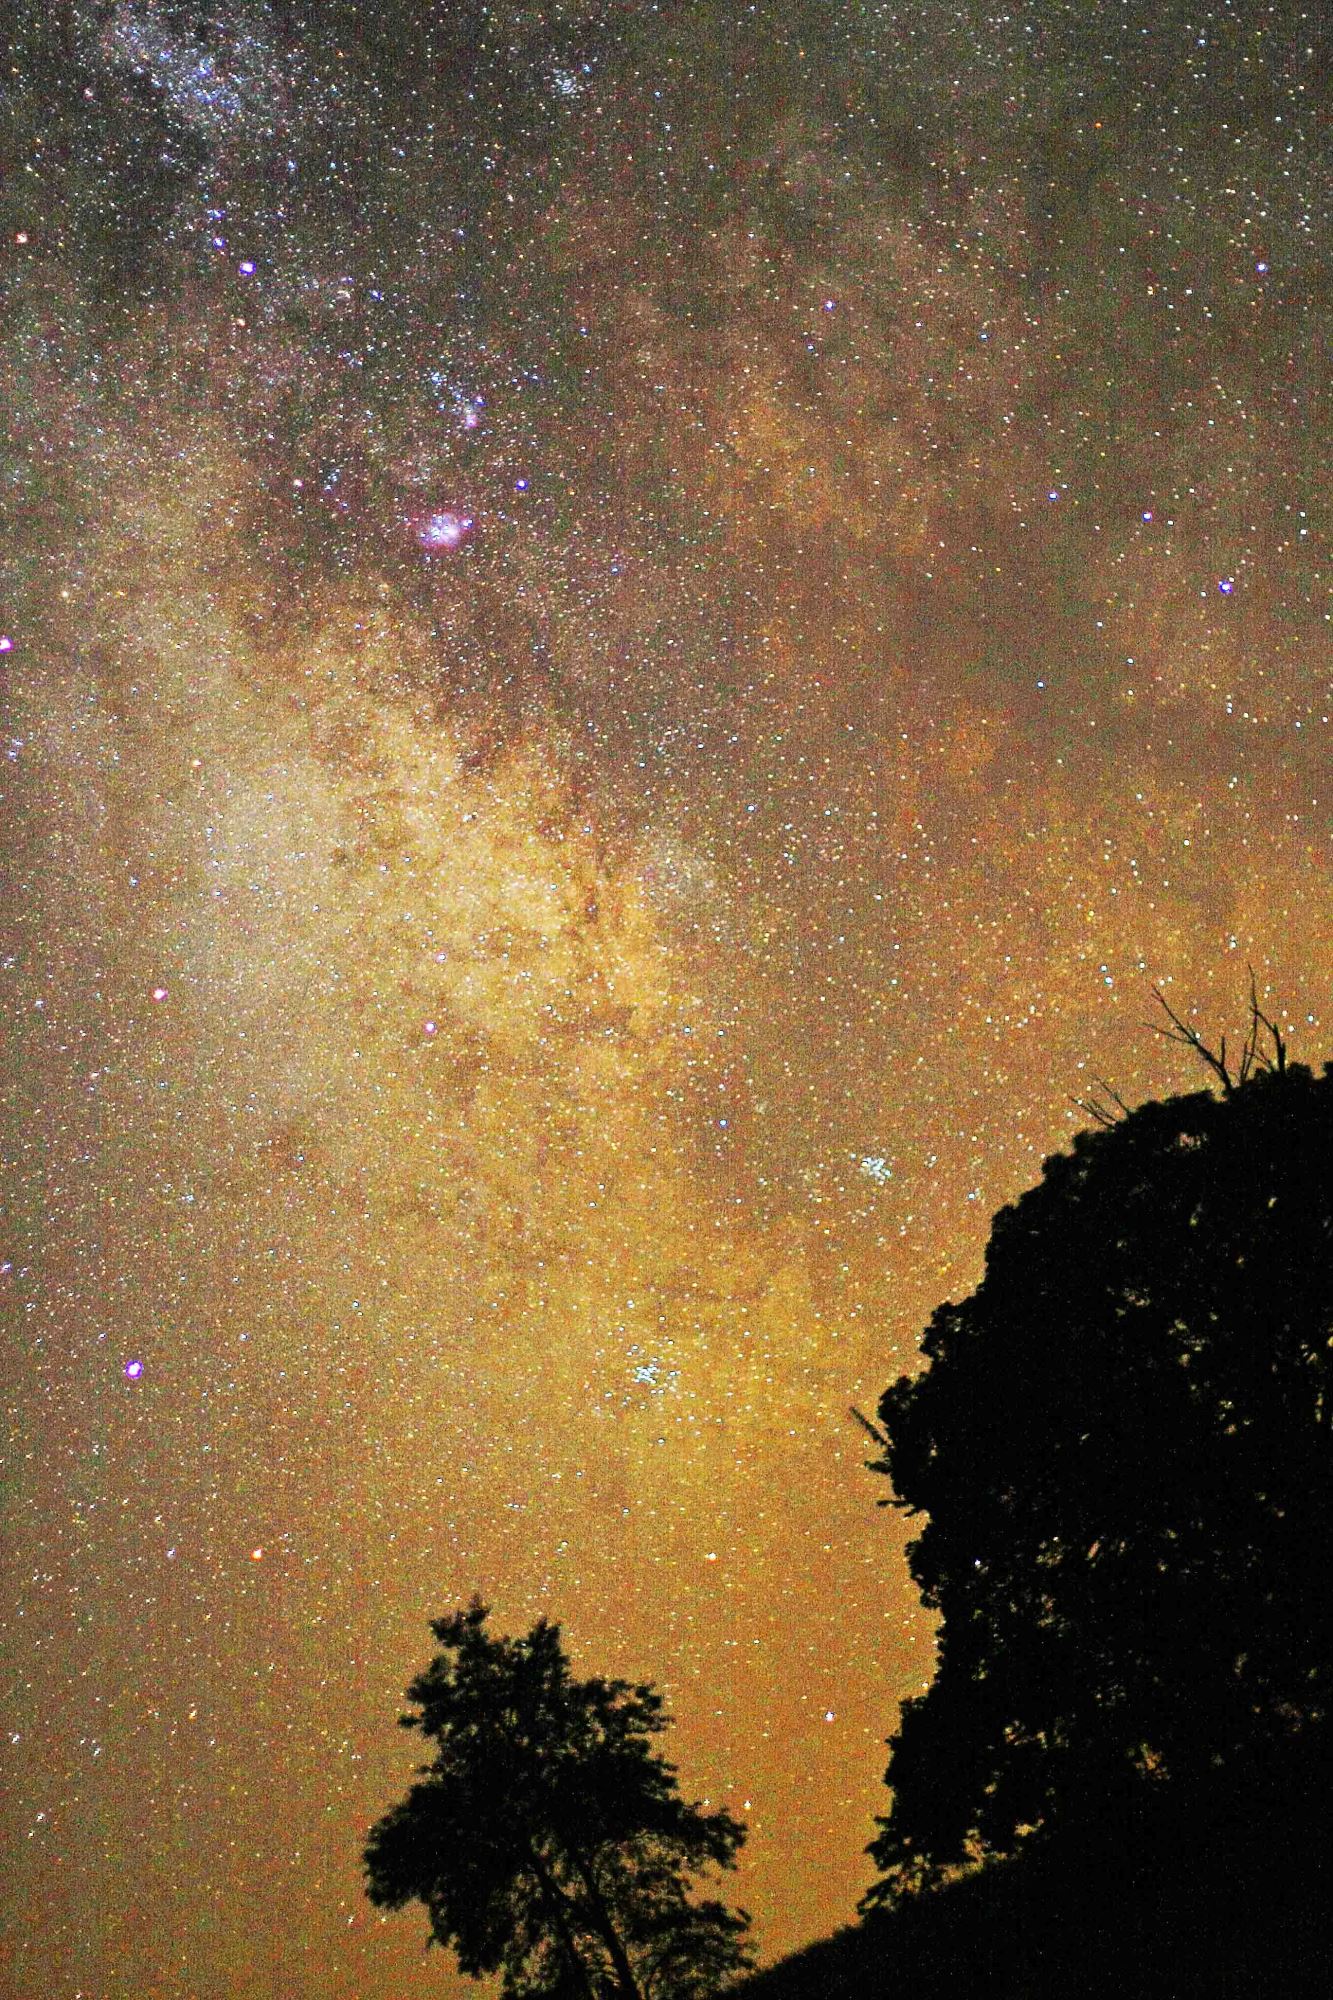 Starry sky